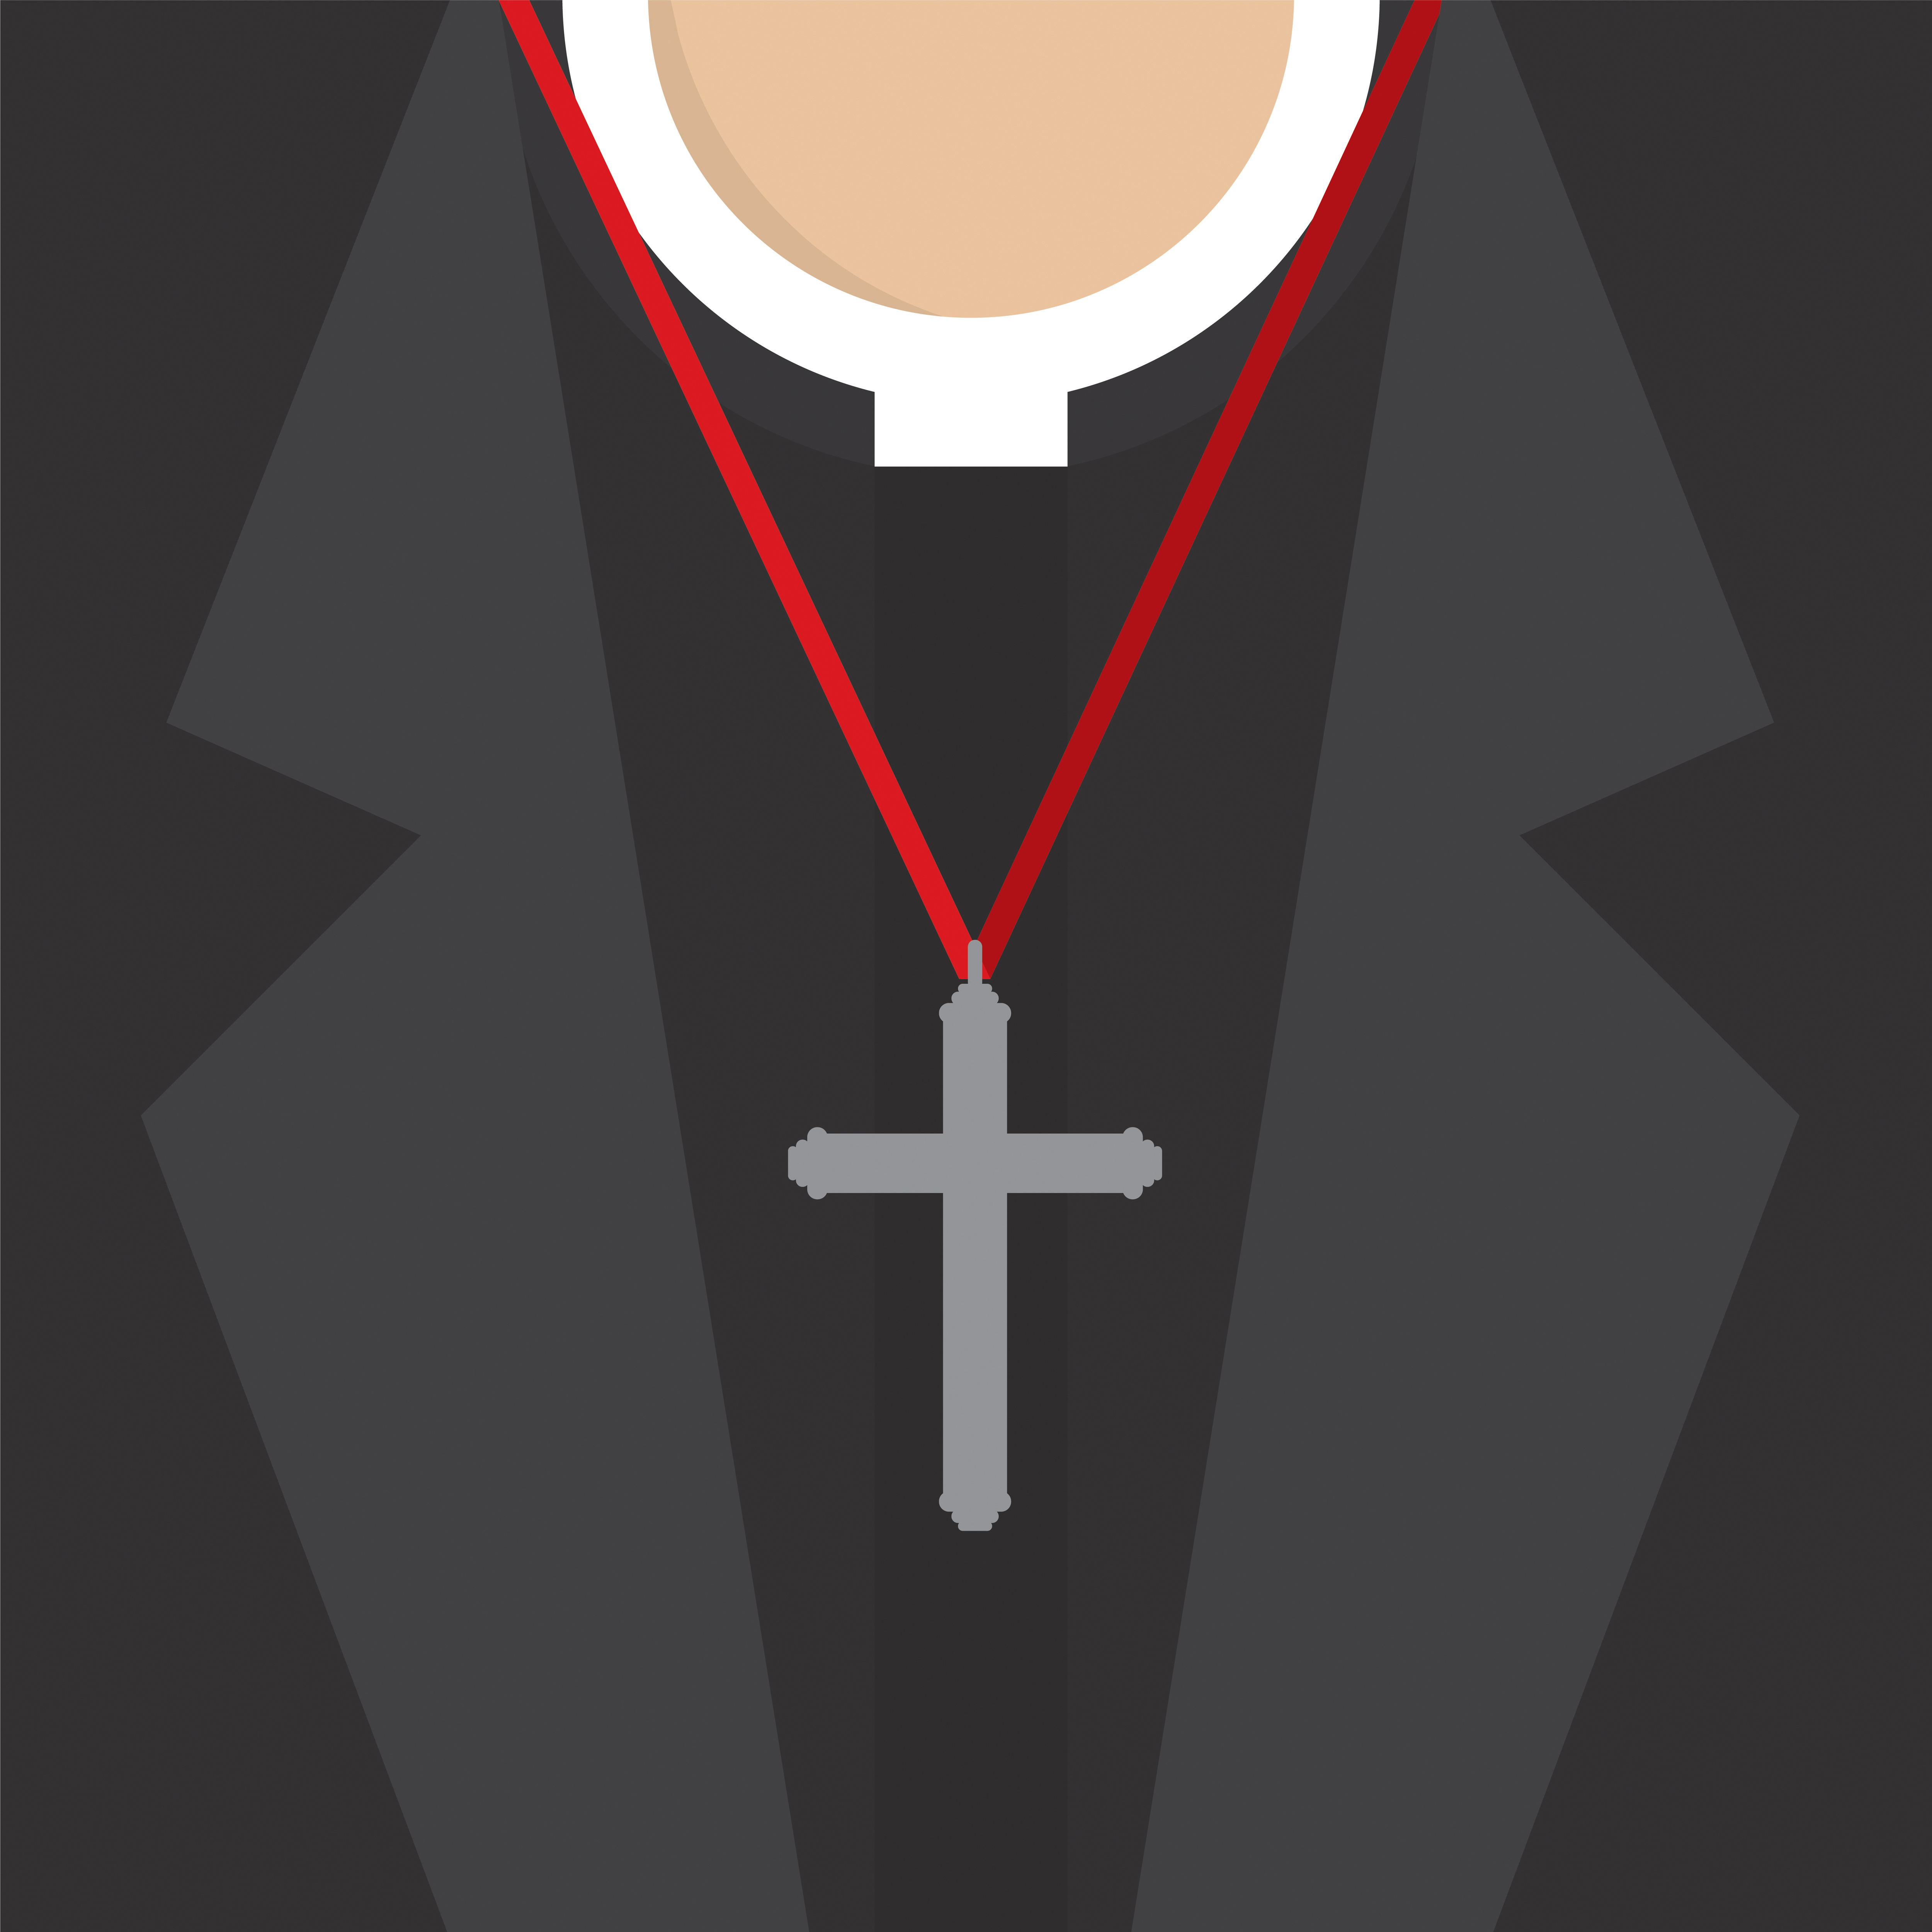 women priests